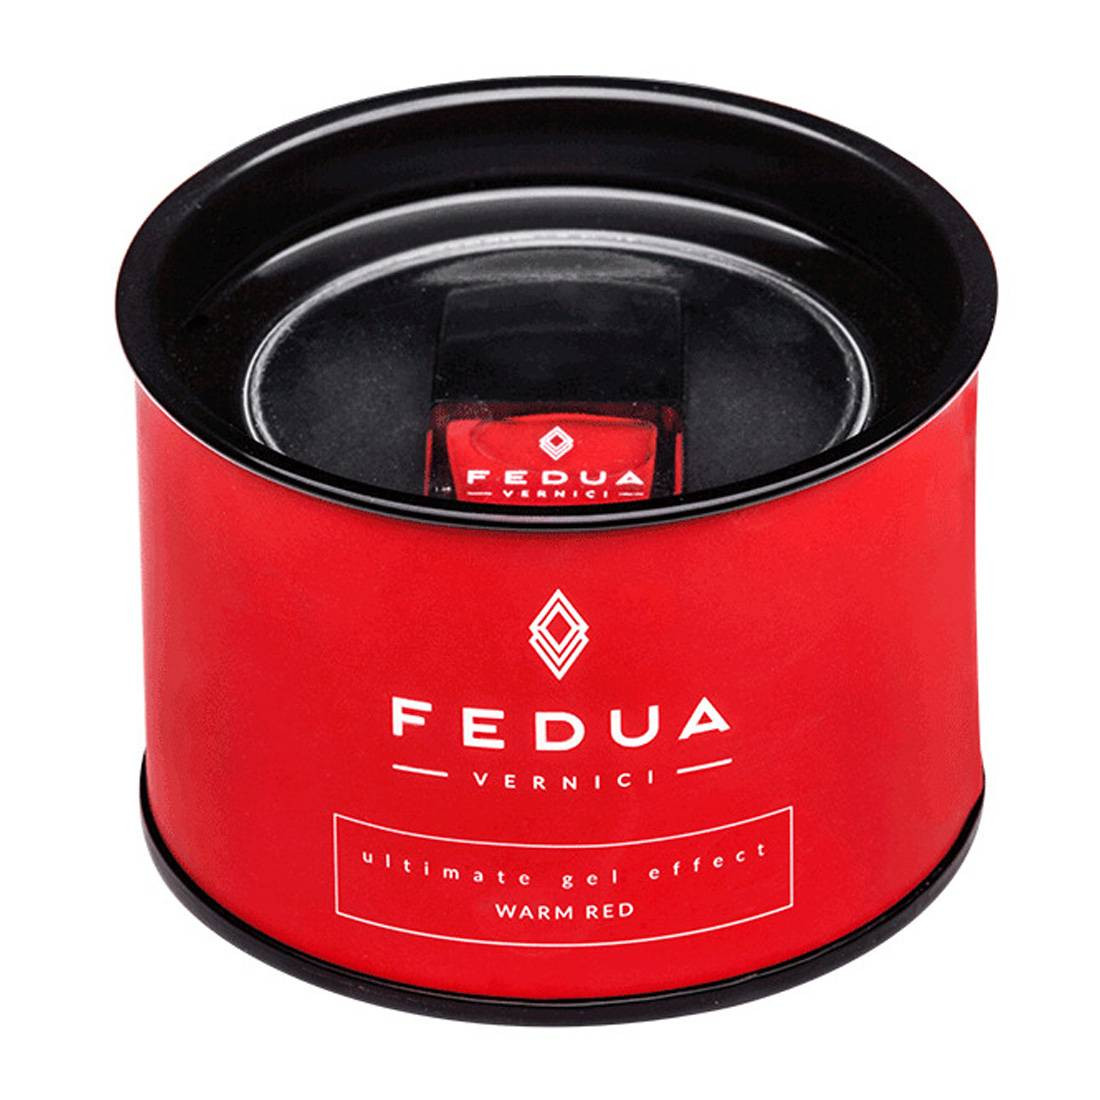 Fedua Vernici Ultimate Collection Warm Red - Лак для нігтів Теплий червоний